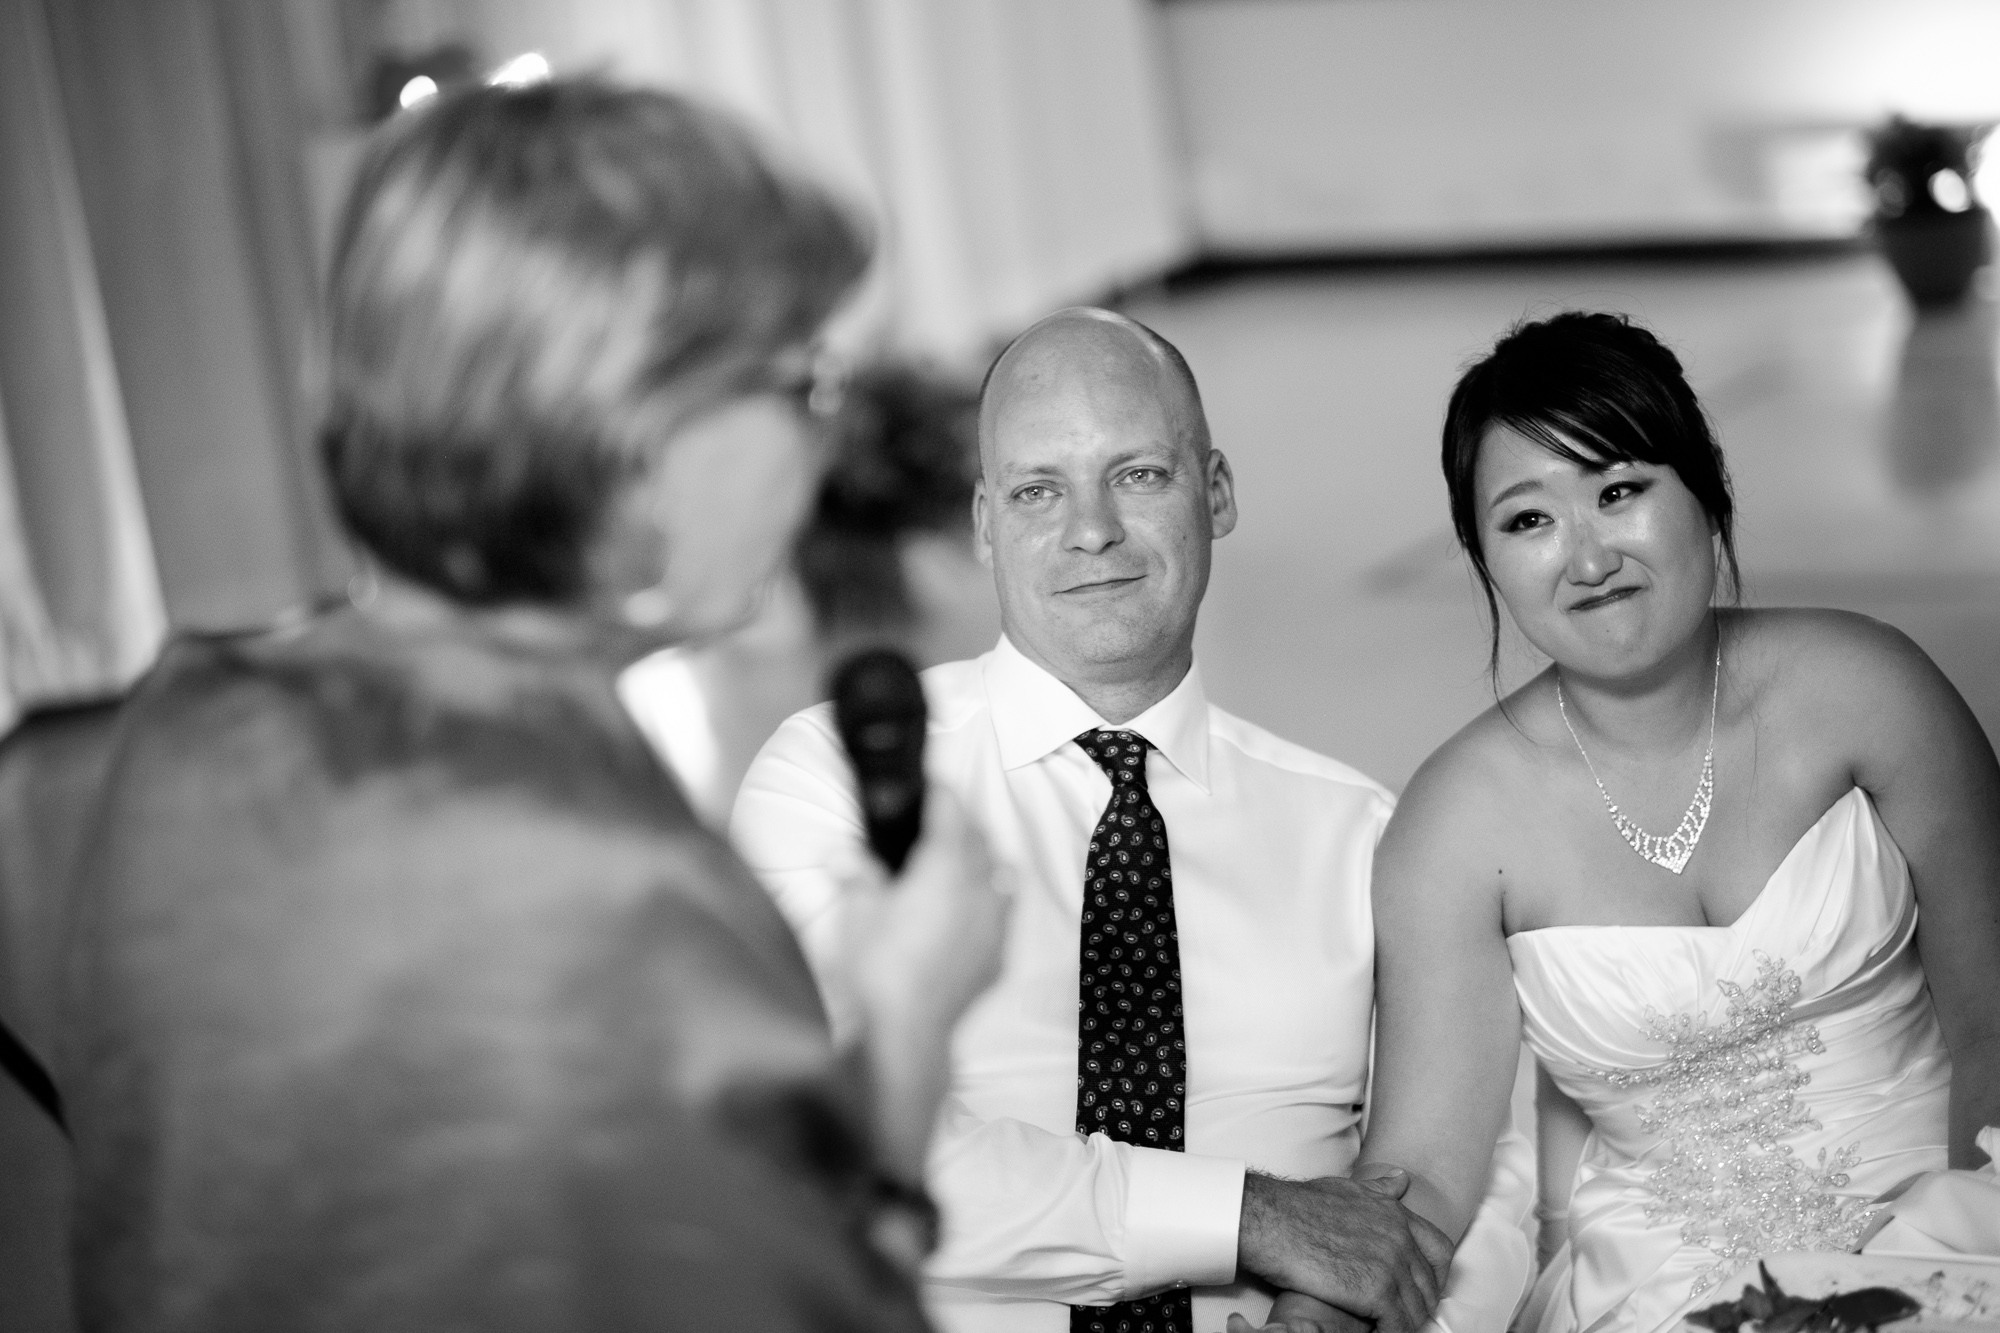  Joohee + Joel look on as Joel's mom gives her speech during the wedding reception in Tobermory.&nbsp; 